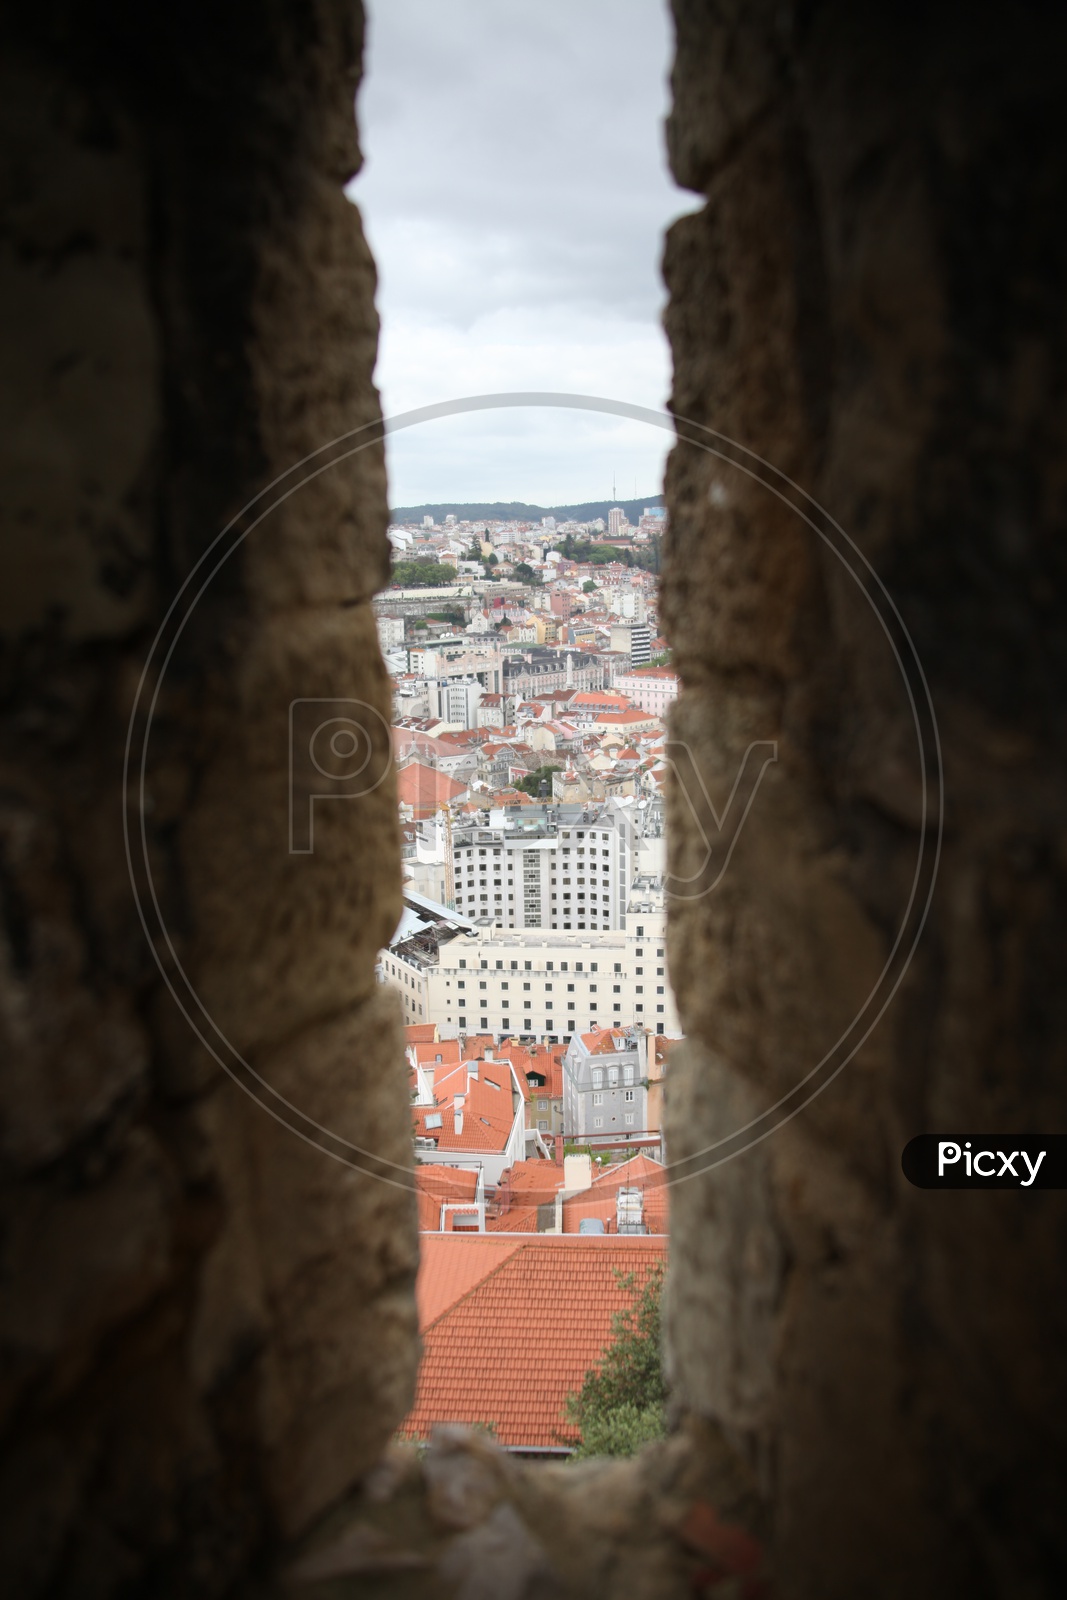 Lisbon City view through the stone walls